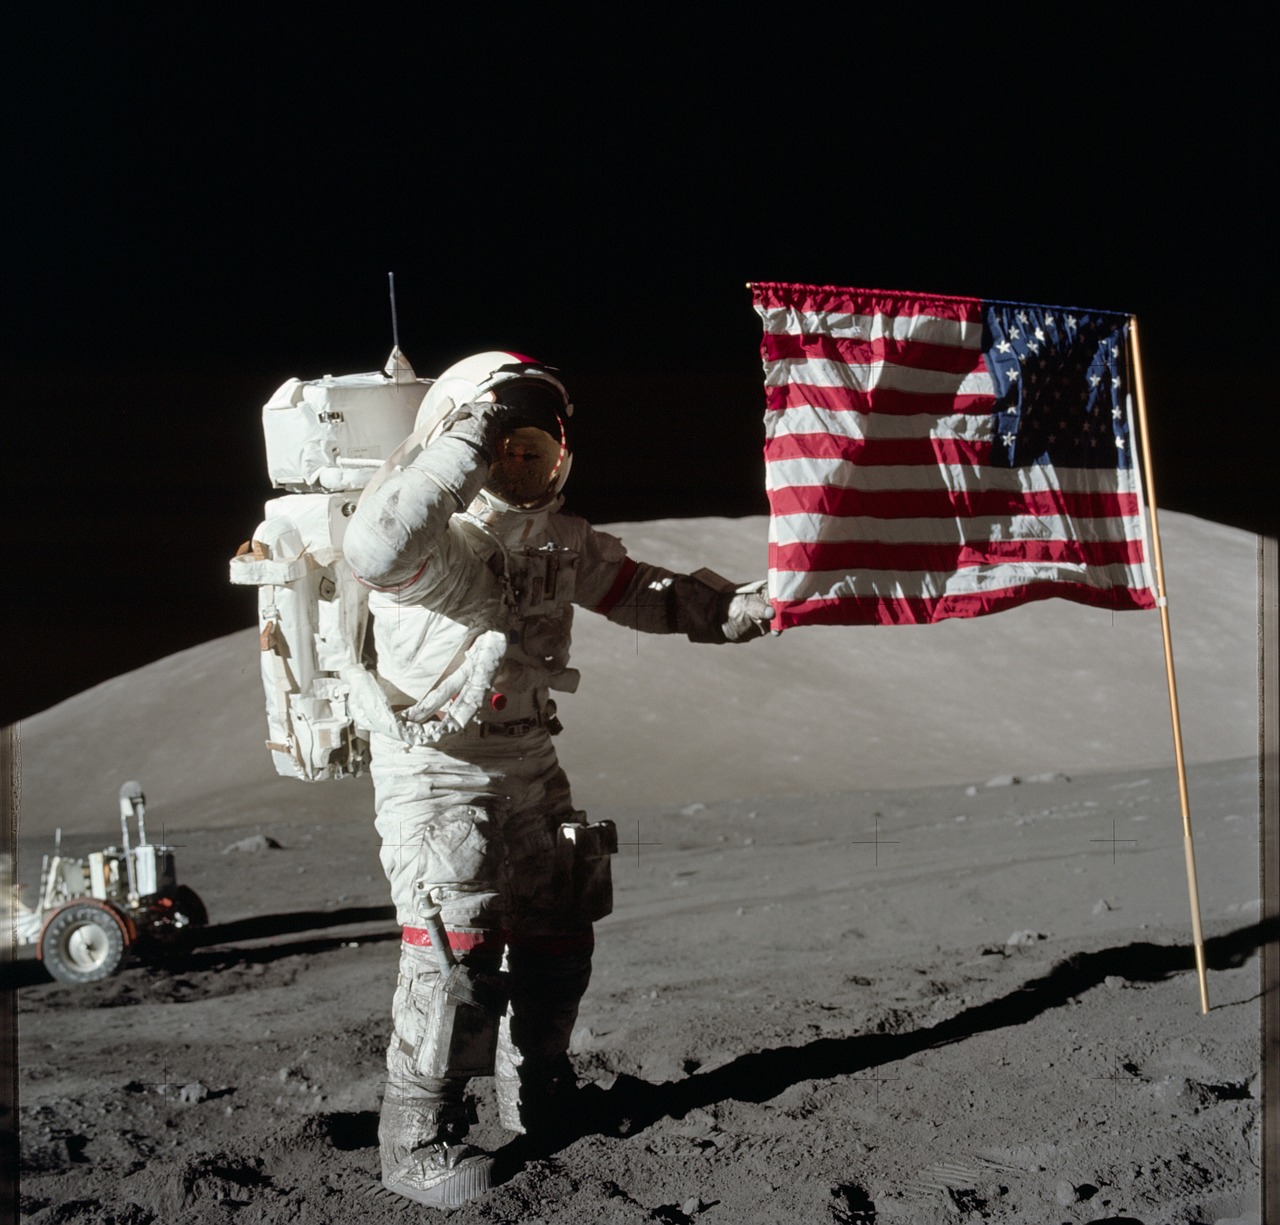 astronaut moon flag free photo